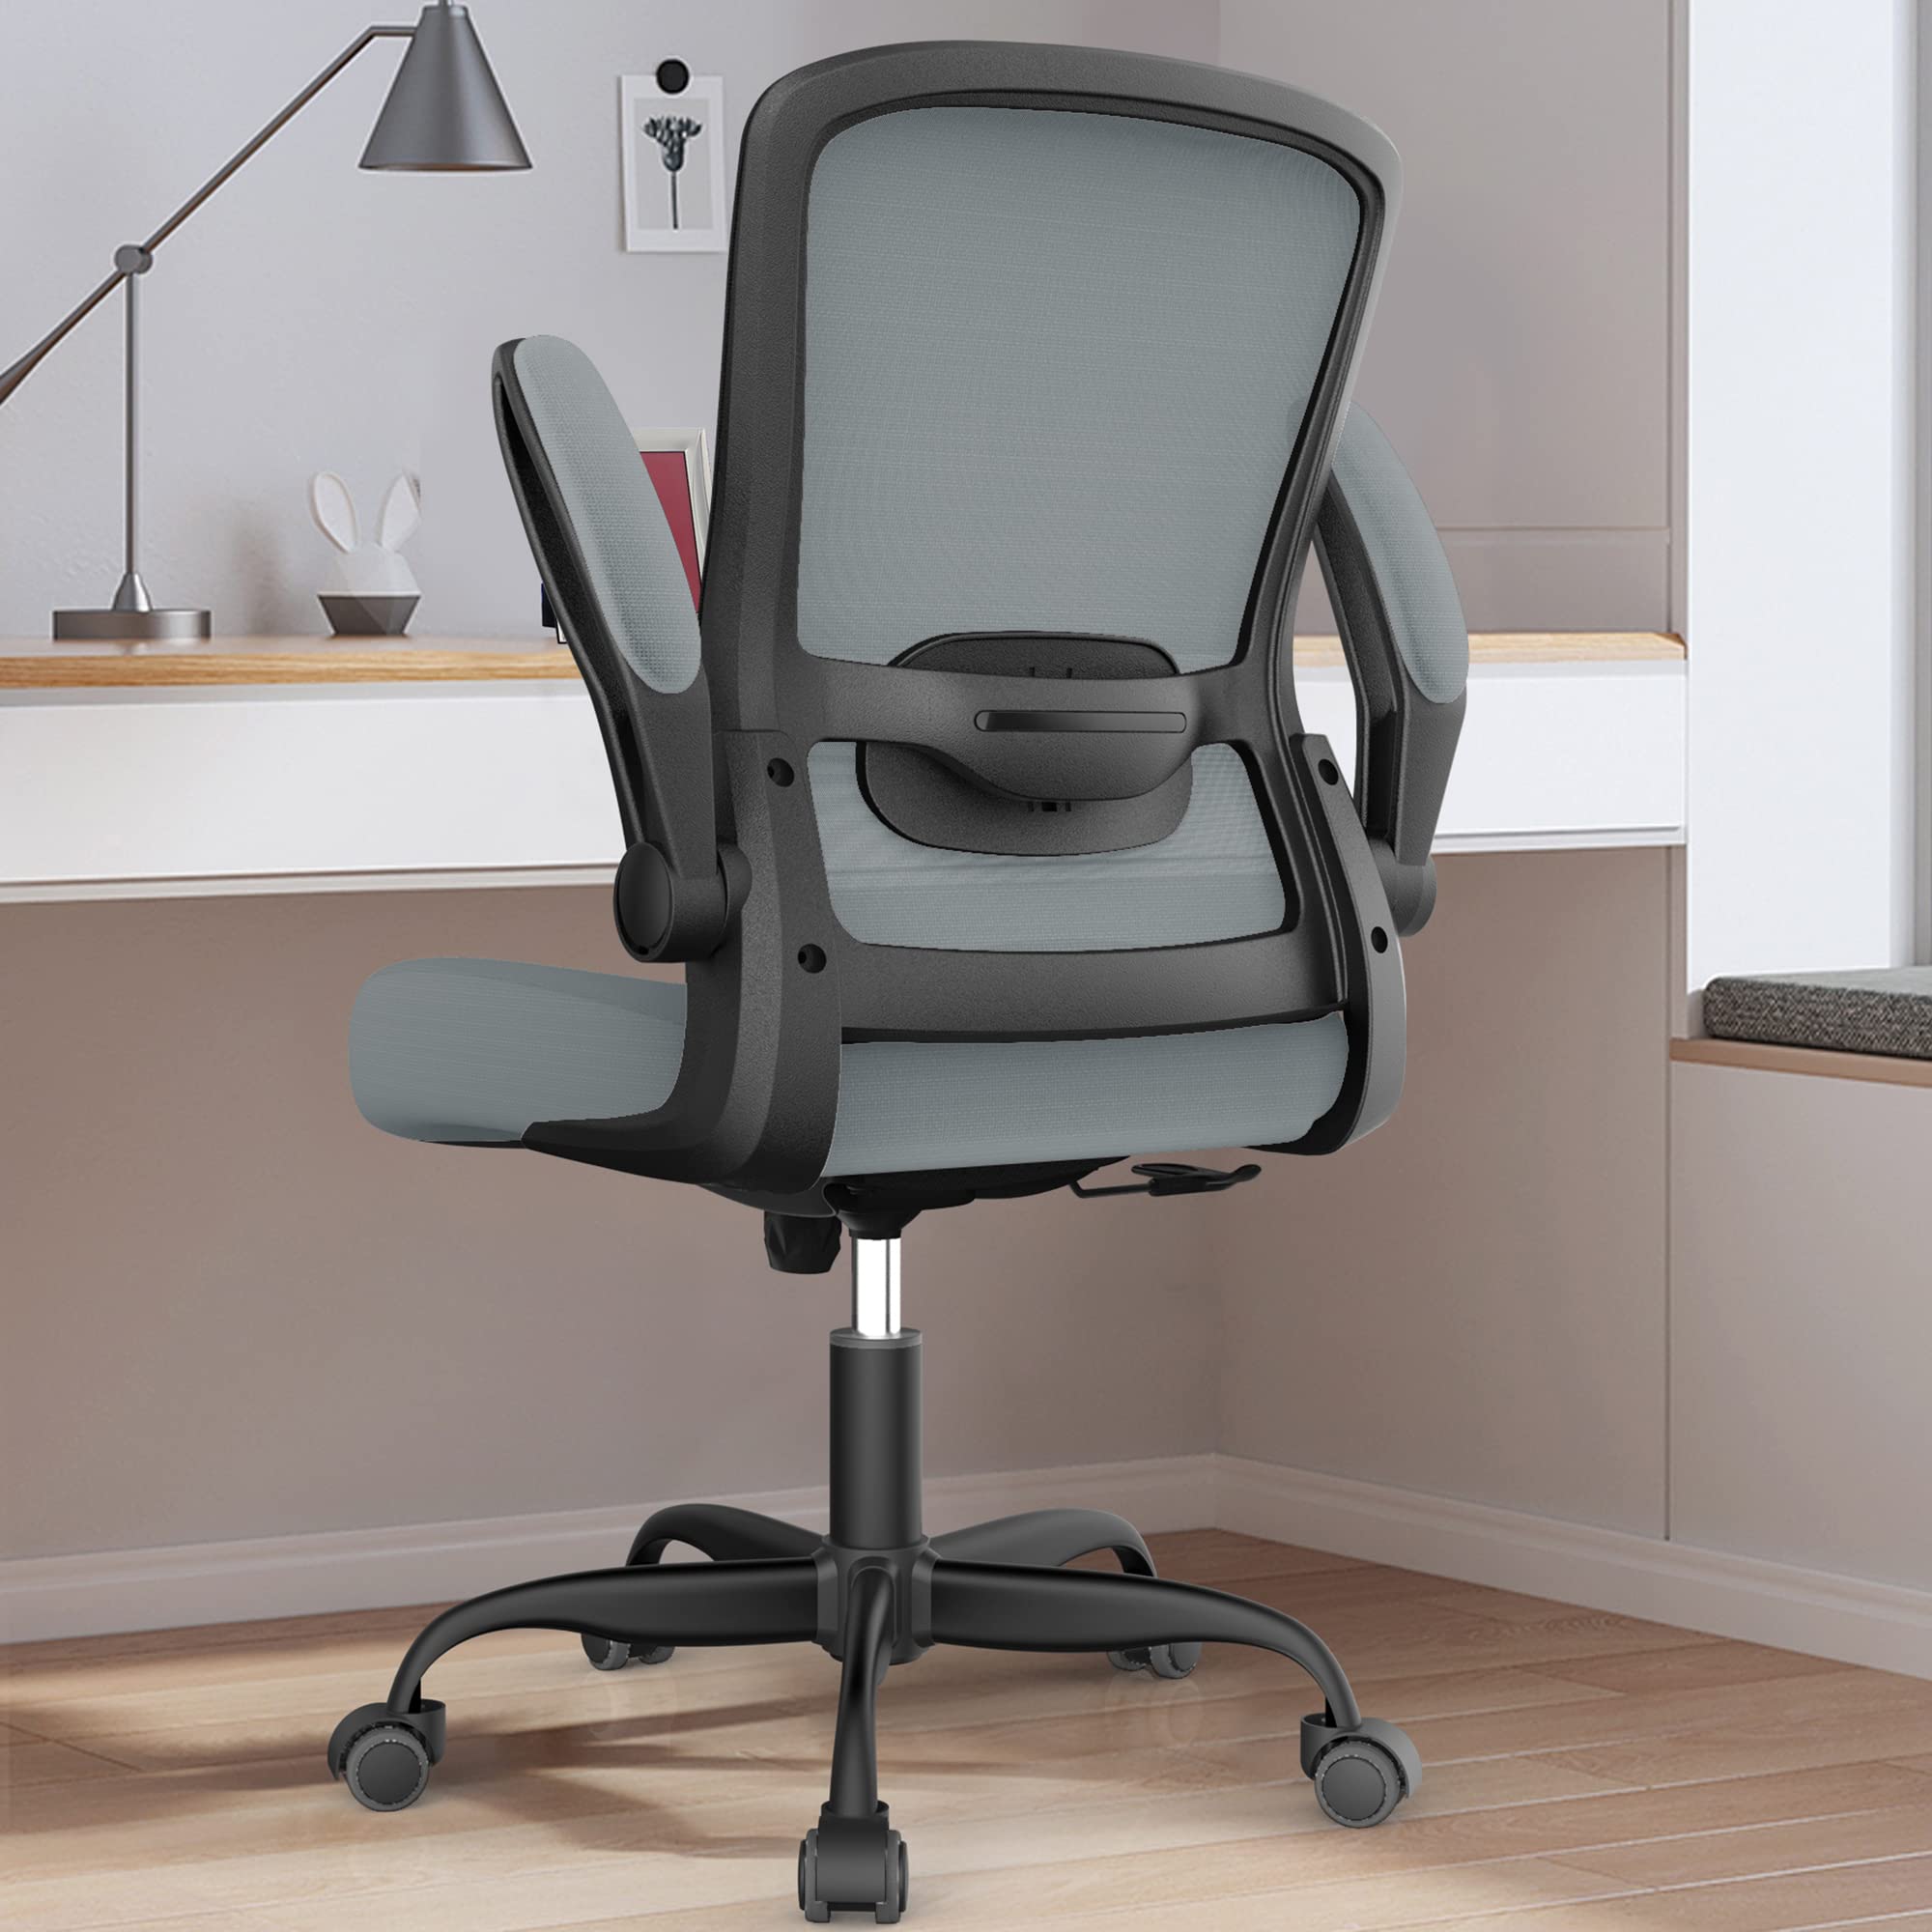 Mimoglad Home Office Chair, High Back Desk Chair, Ergonomic Mesh